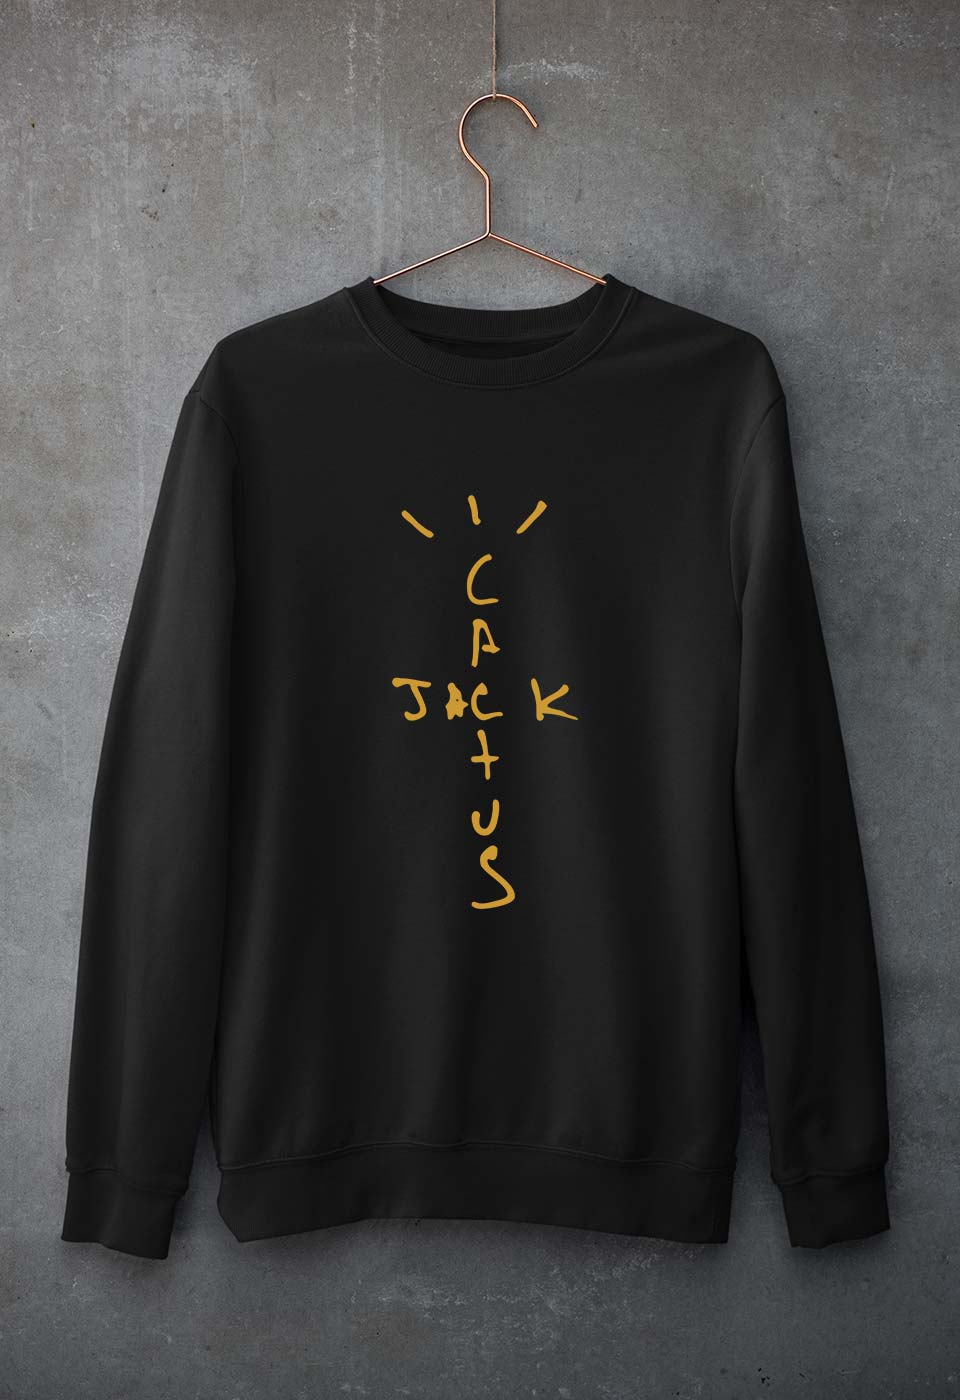 Cactus Jack Travis Scott Unisex Sweatshirt for Men/Women-S(40 Inches)-Black-Ektarfa.online